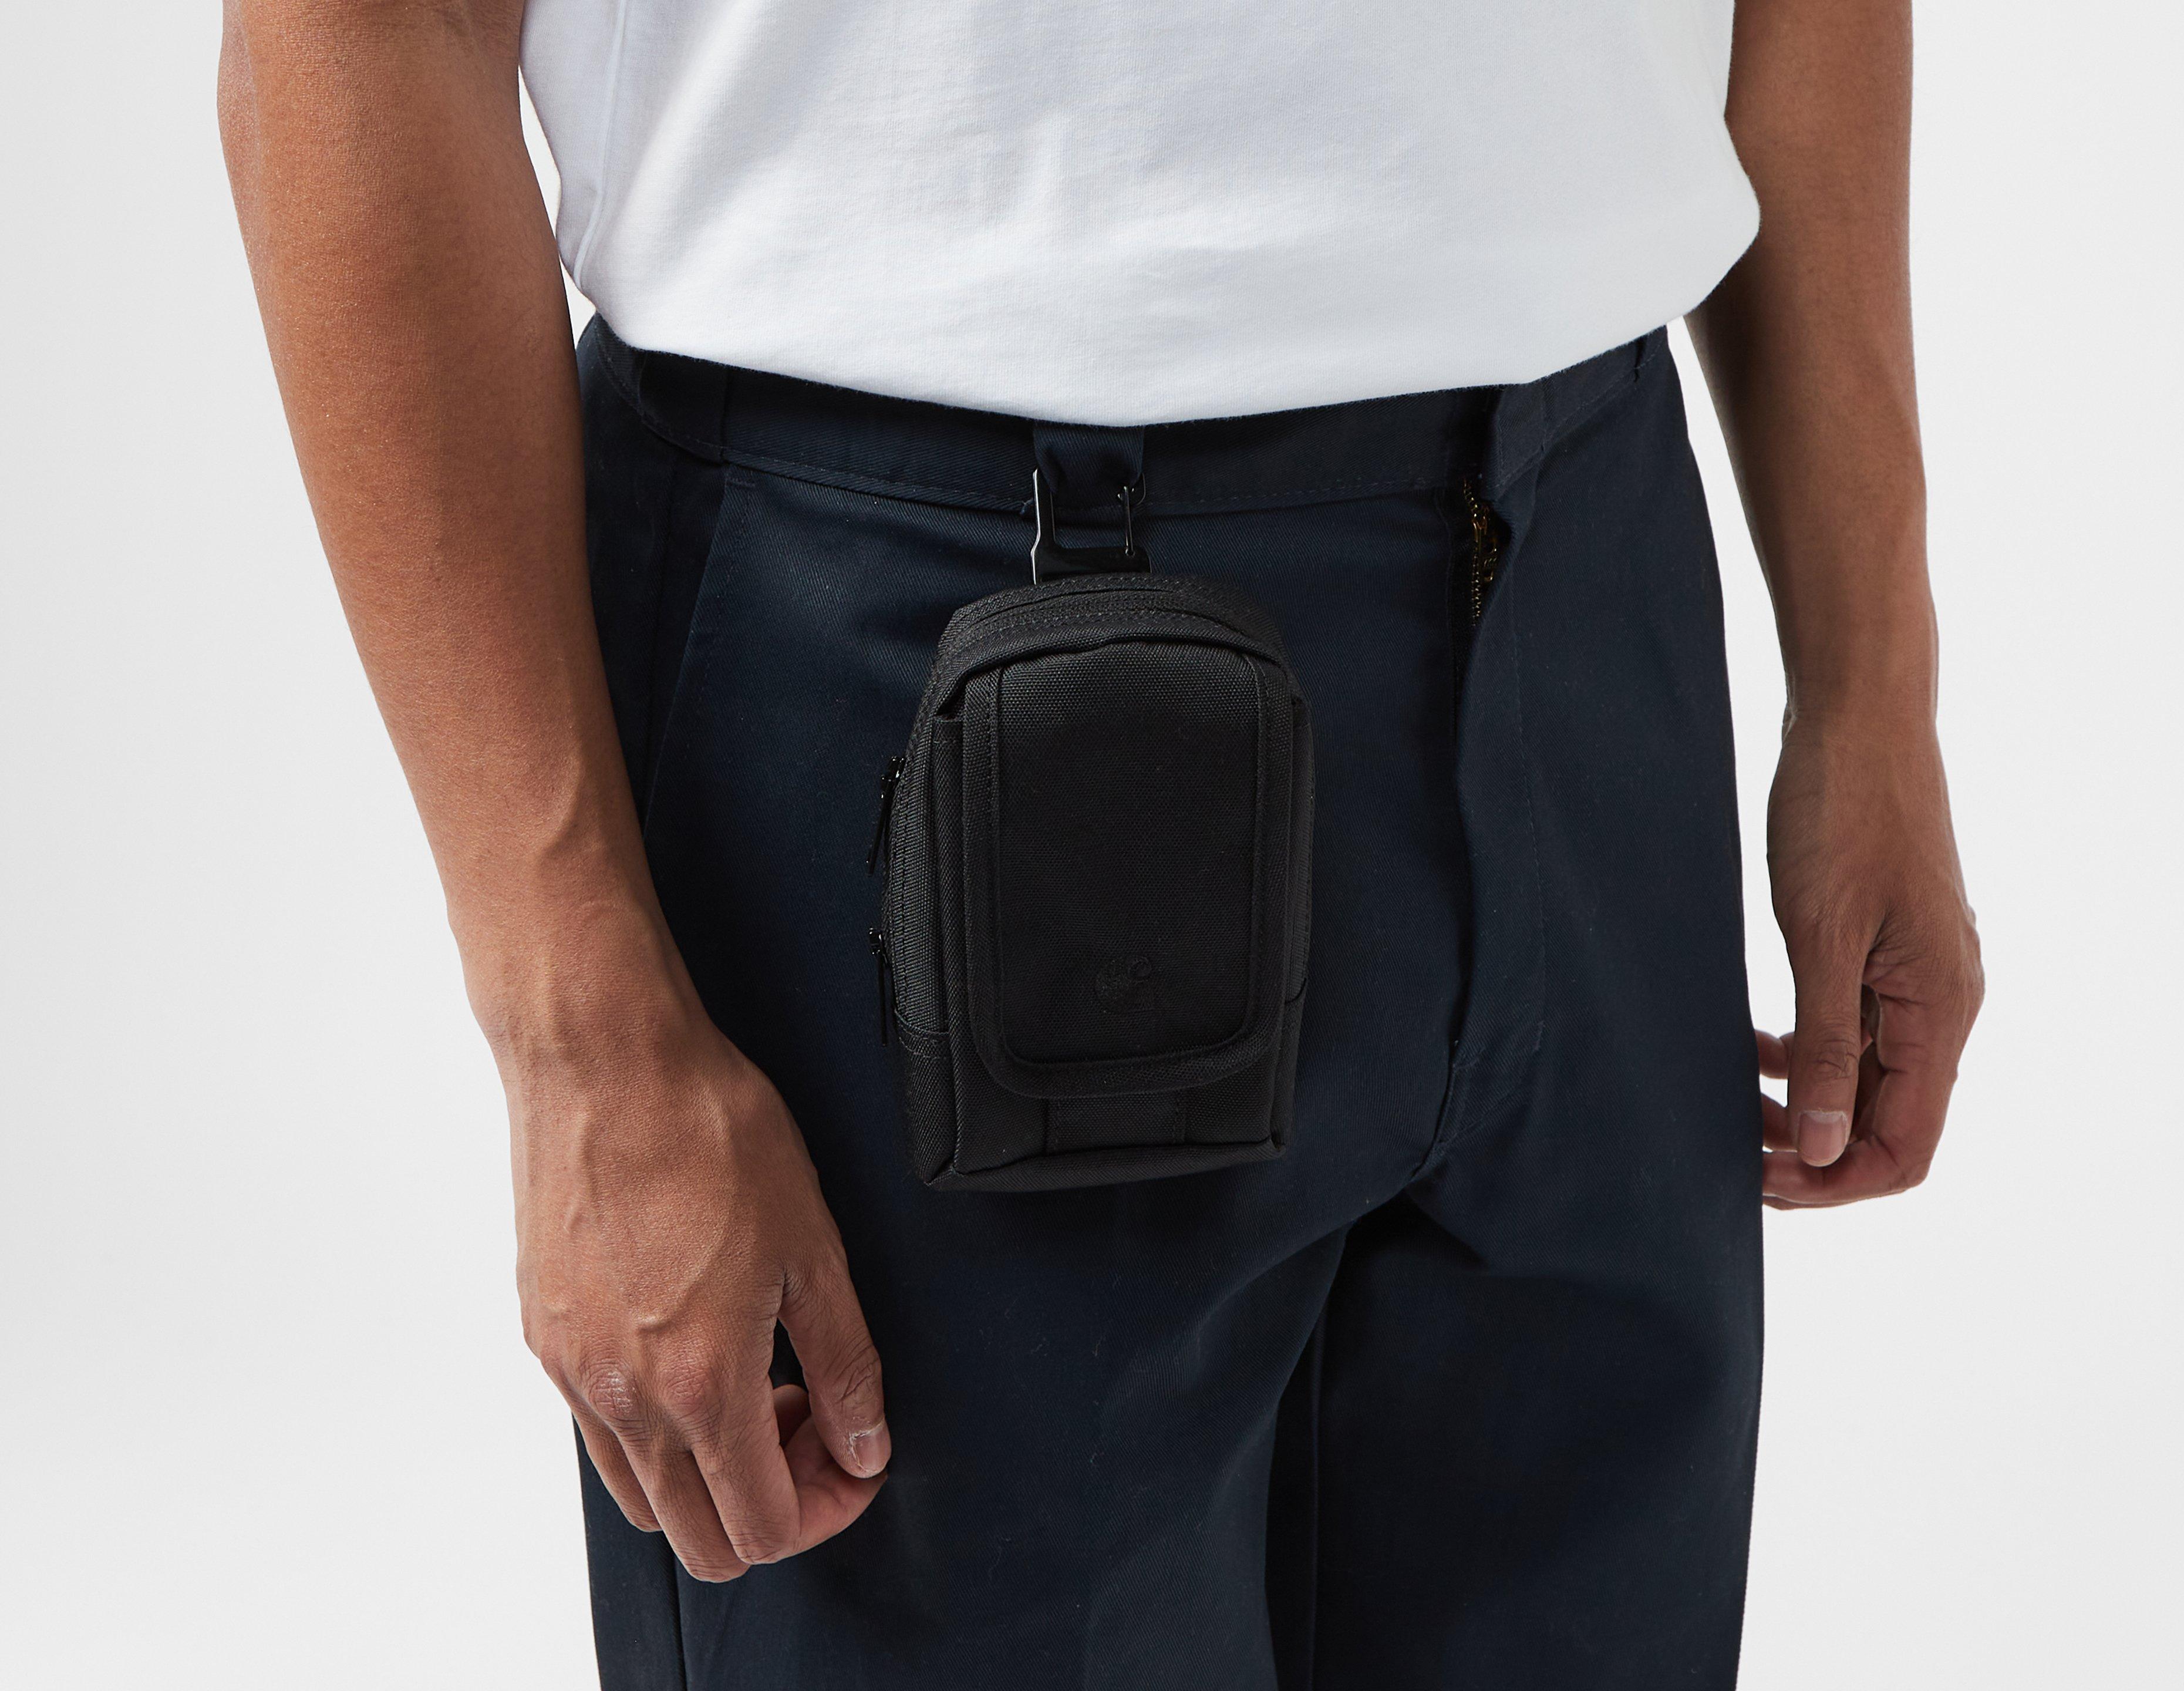 Buy Carhartt Wip Bags: Tote Bags, Shoulder Bags & More